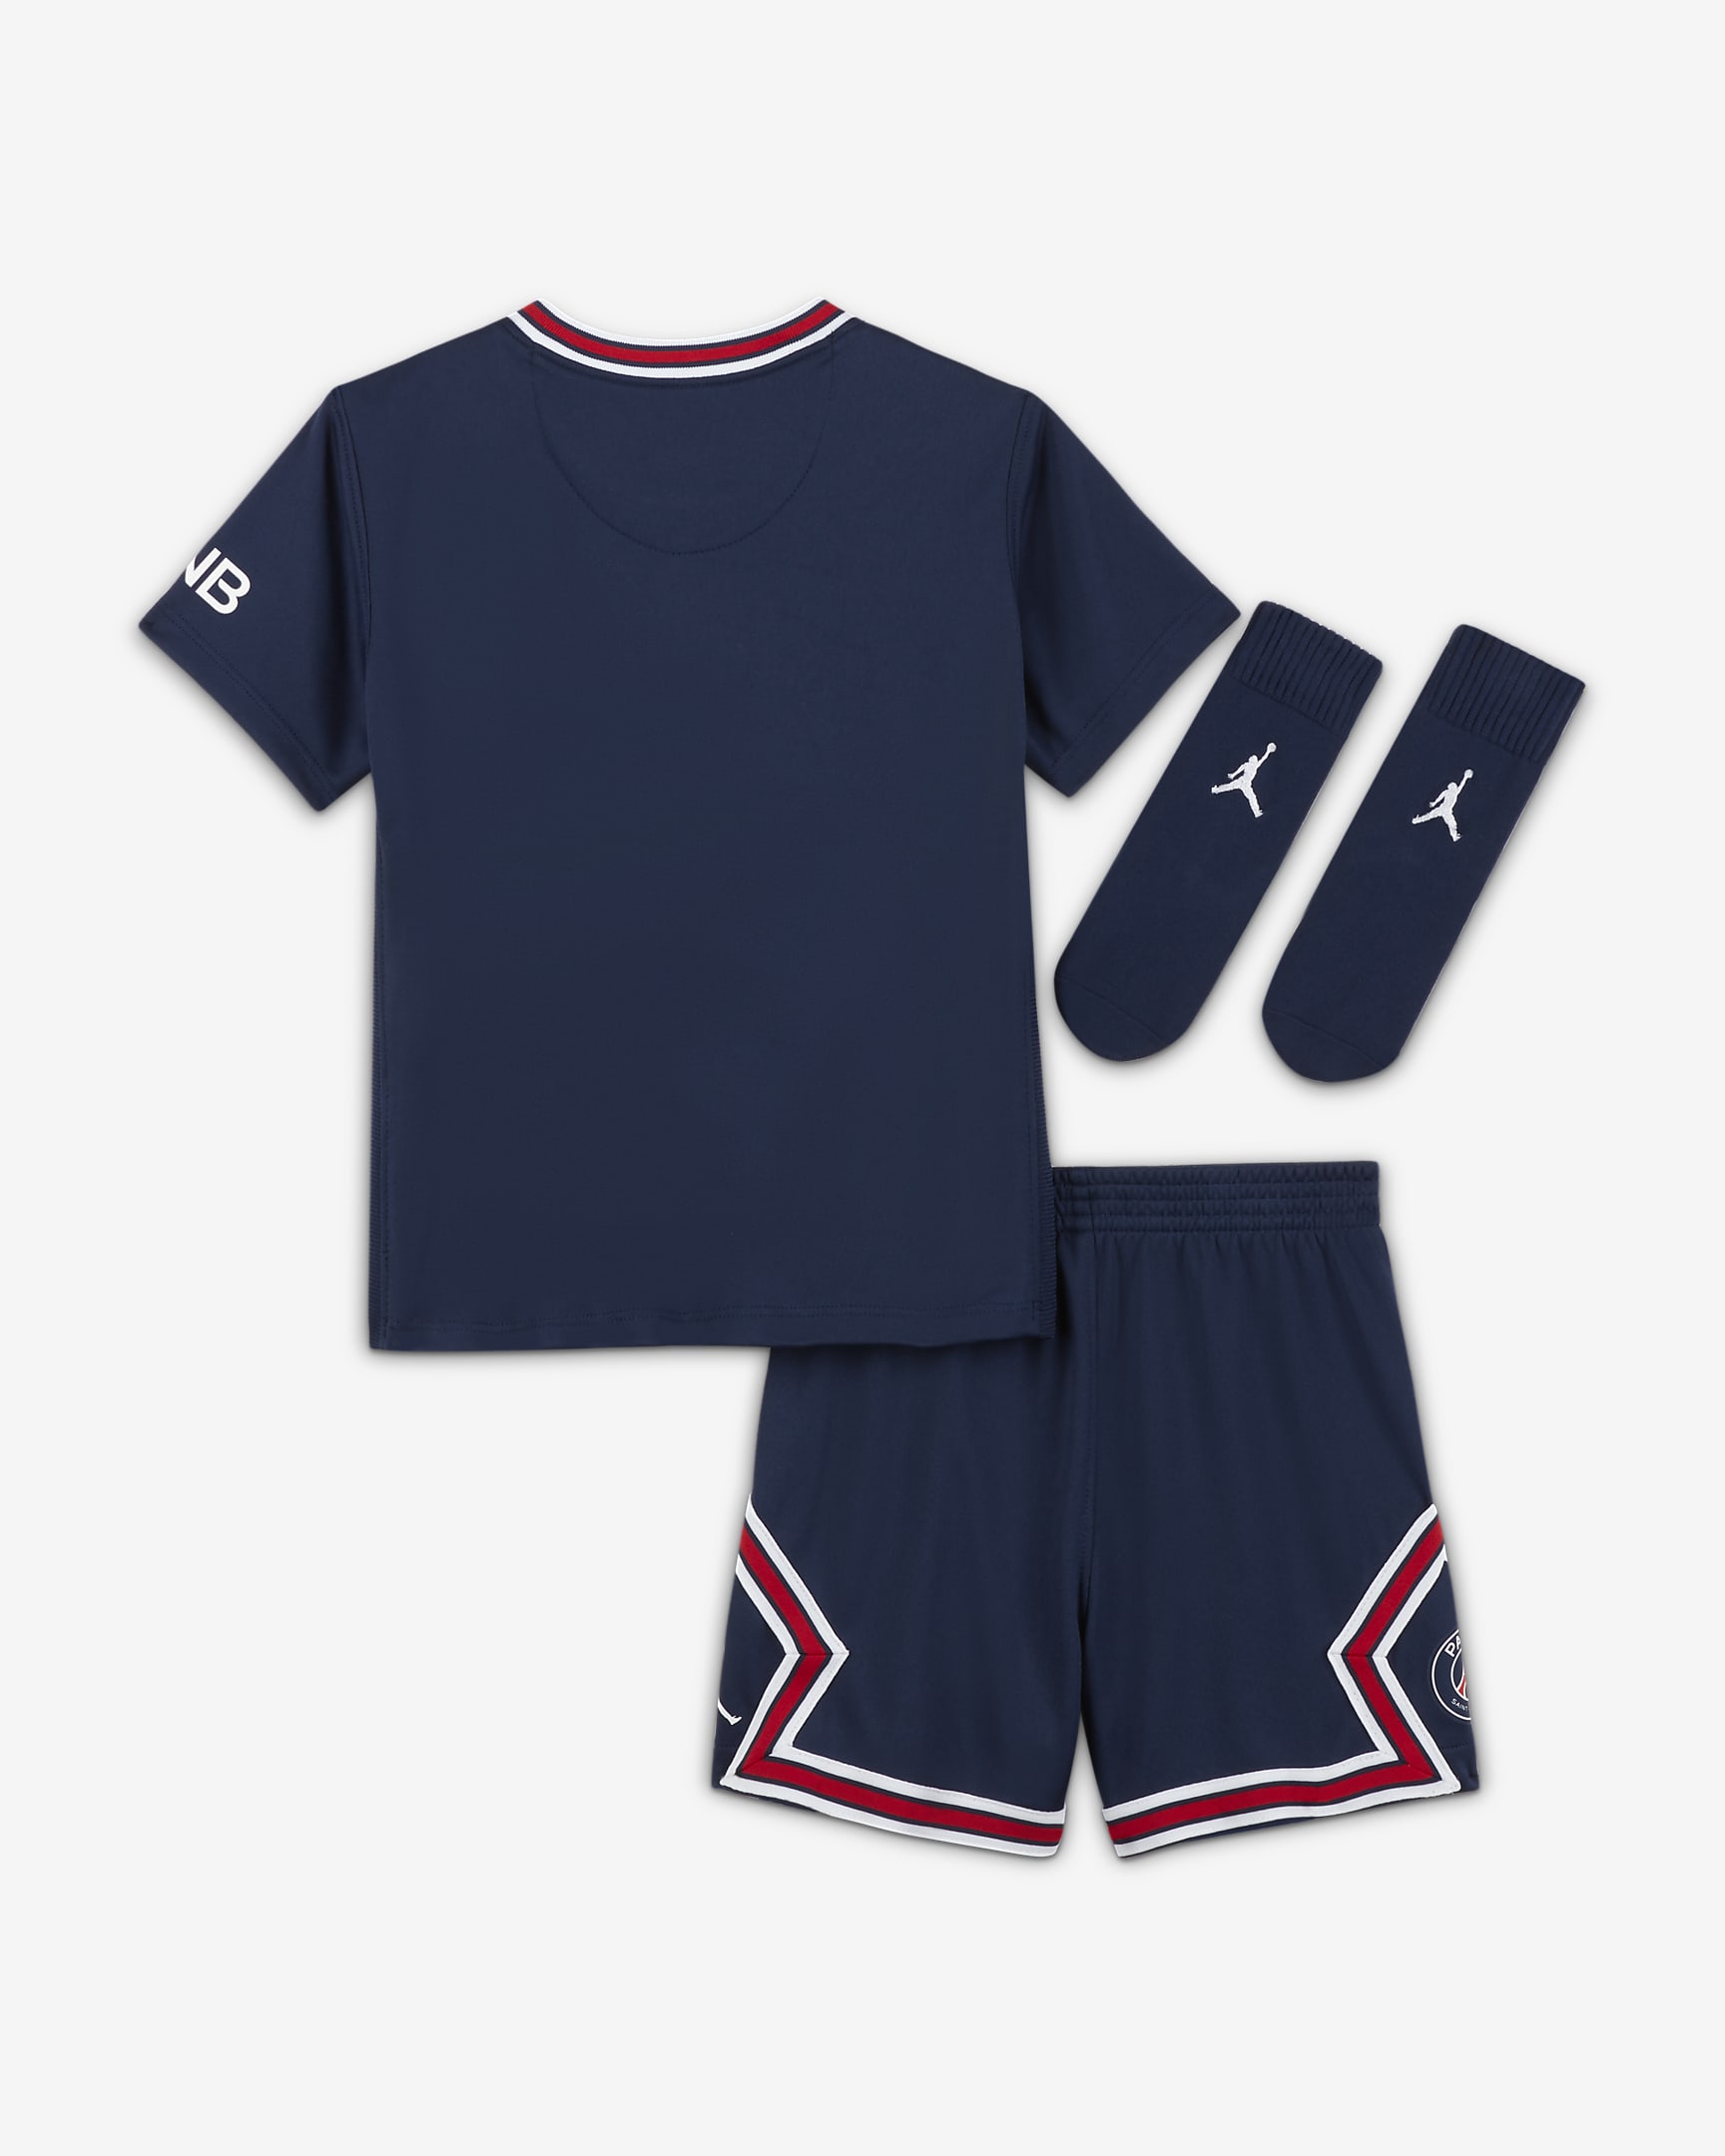 Paris Saint-Germain 2021/22 Home Baby & Toddler Football Kit. Nike HU